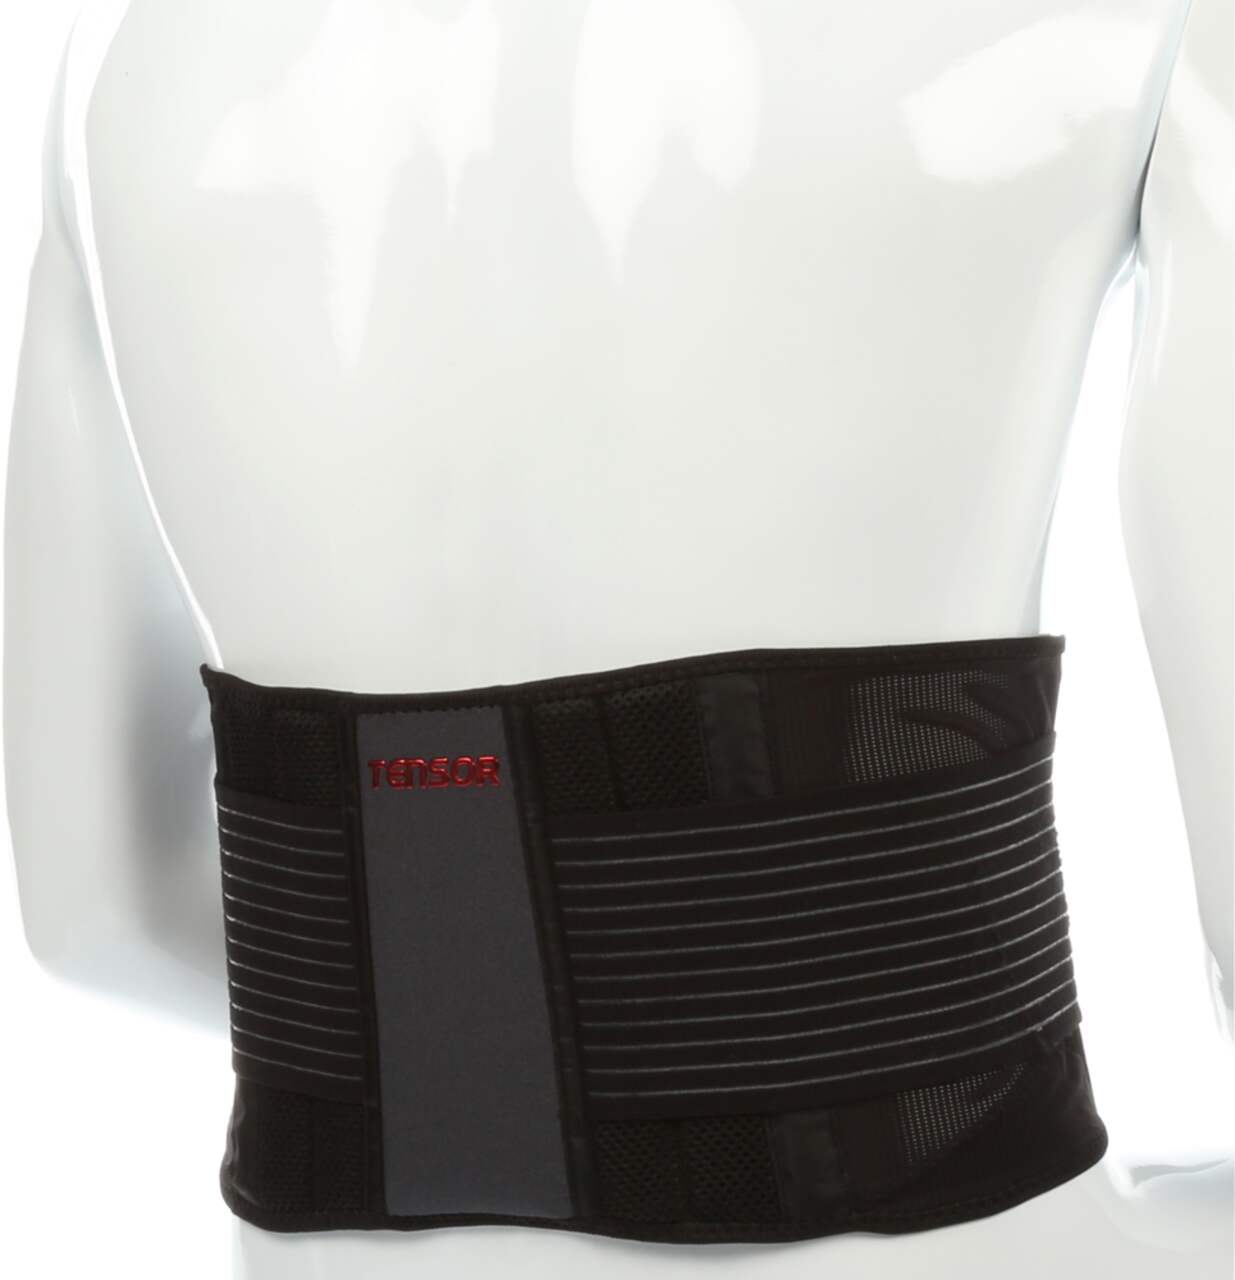 Rdeghly Adjustable Lumbar Support Belt Lower Back Brace Posture